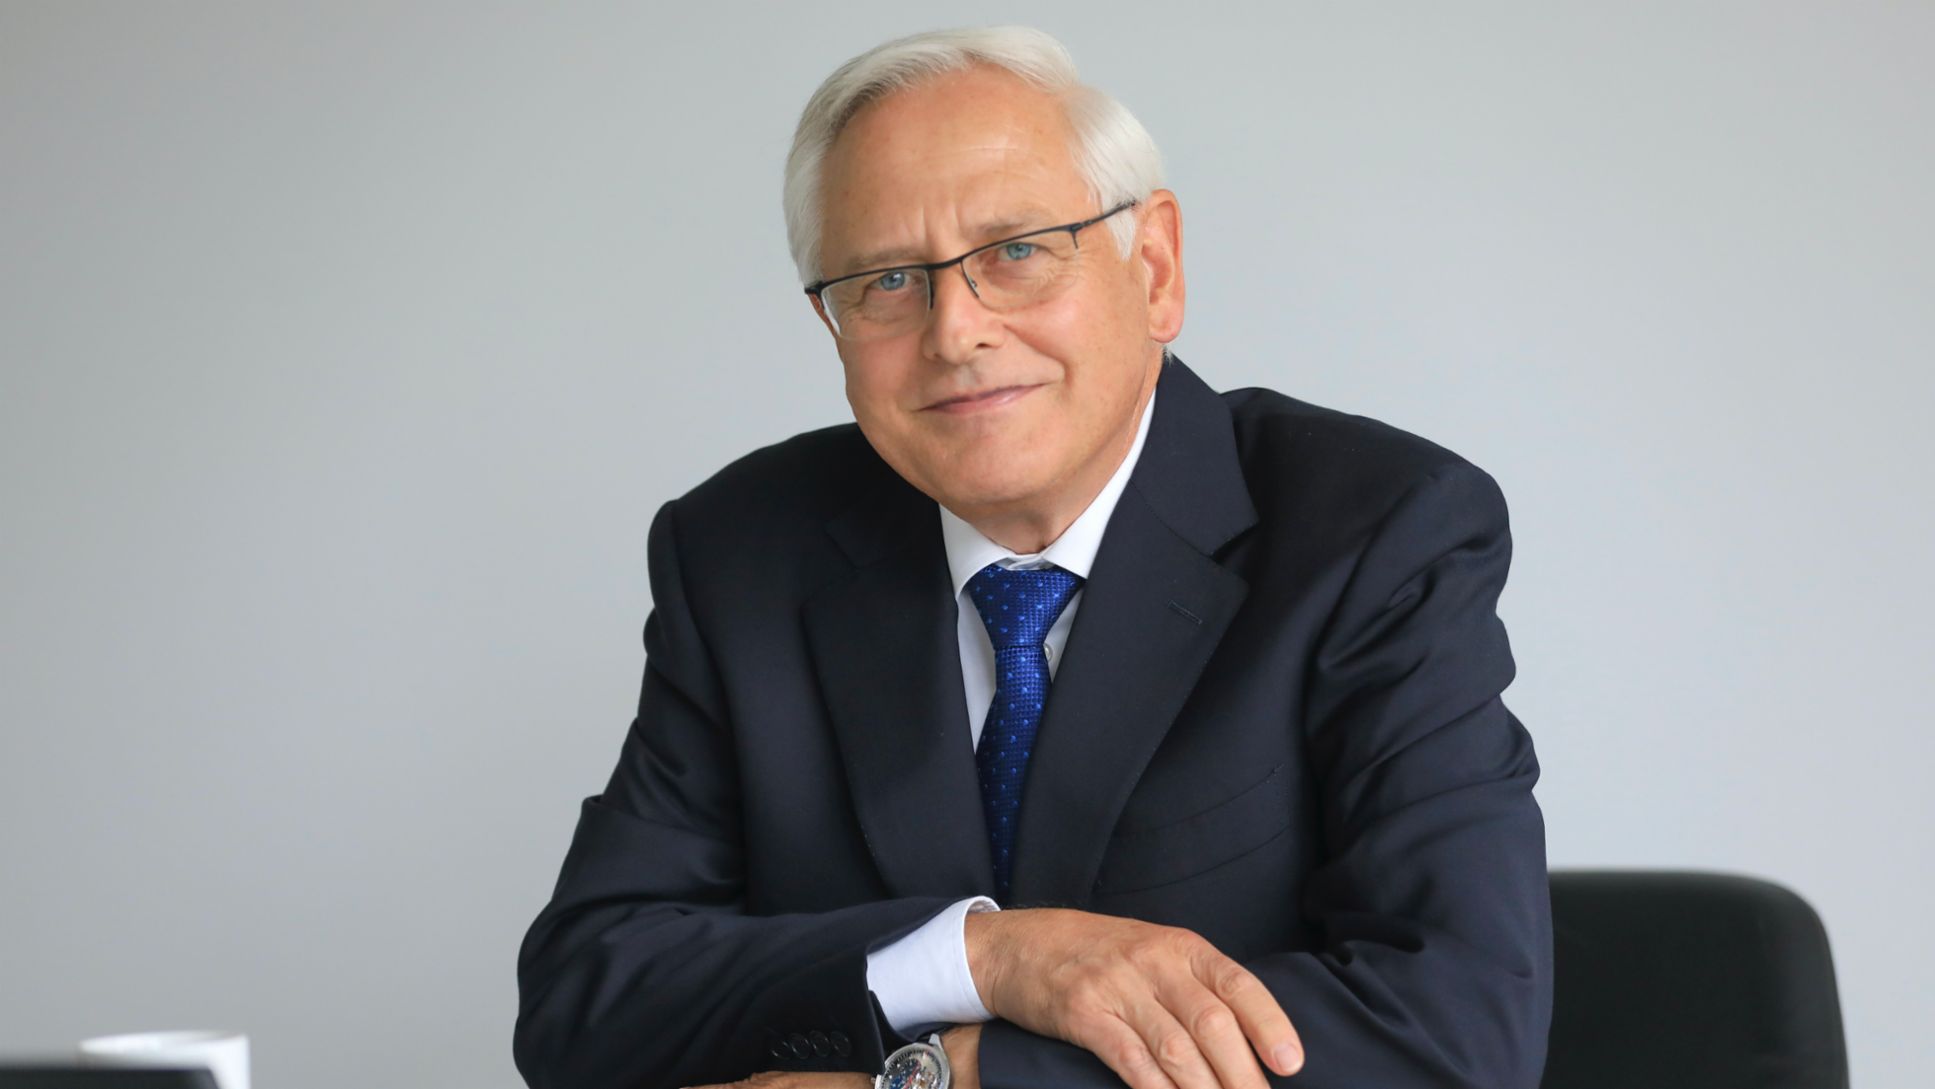 Uwe-Karsten Städter, miembro del Consejo de Dirección como responsable de Compras, 2021, Porsche AG